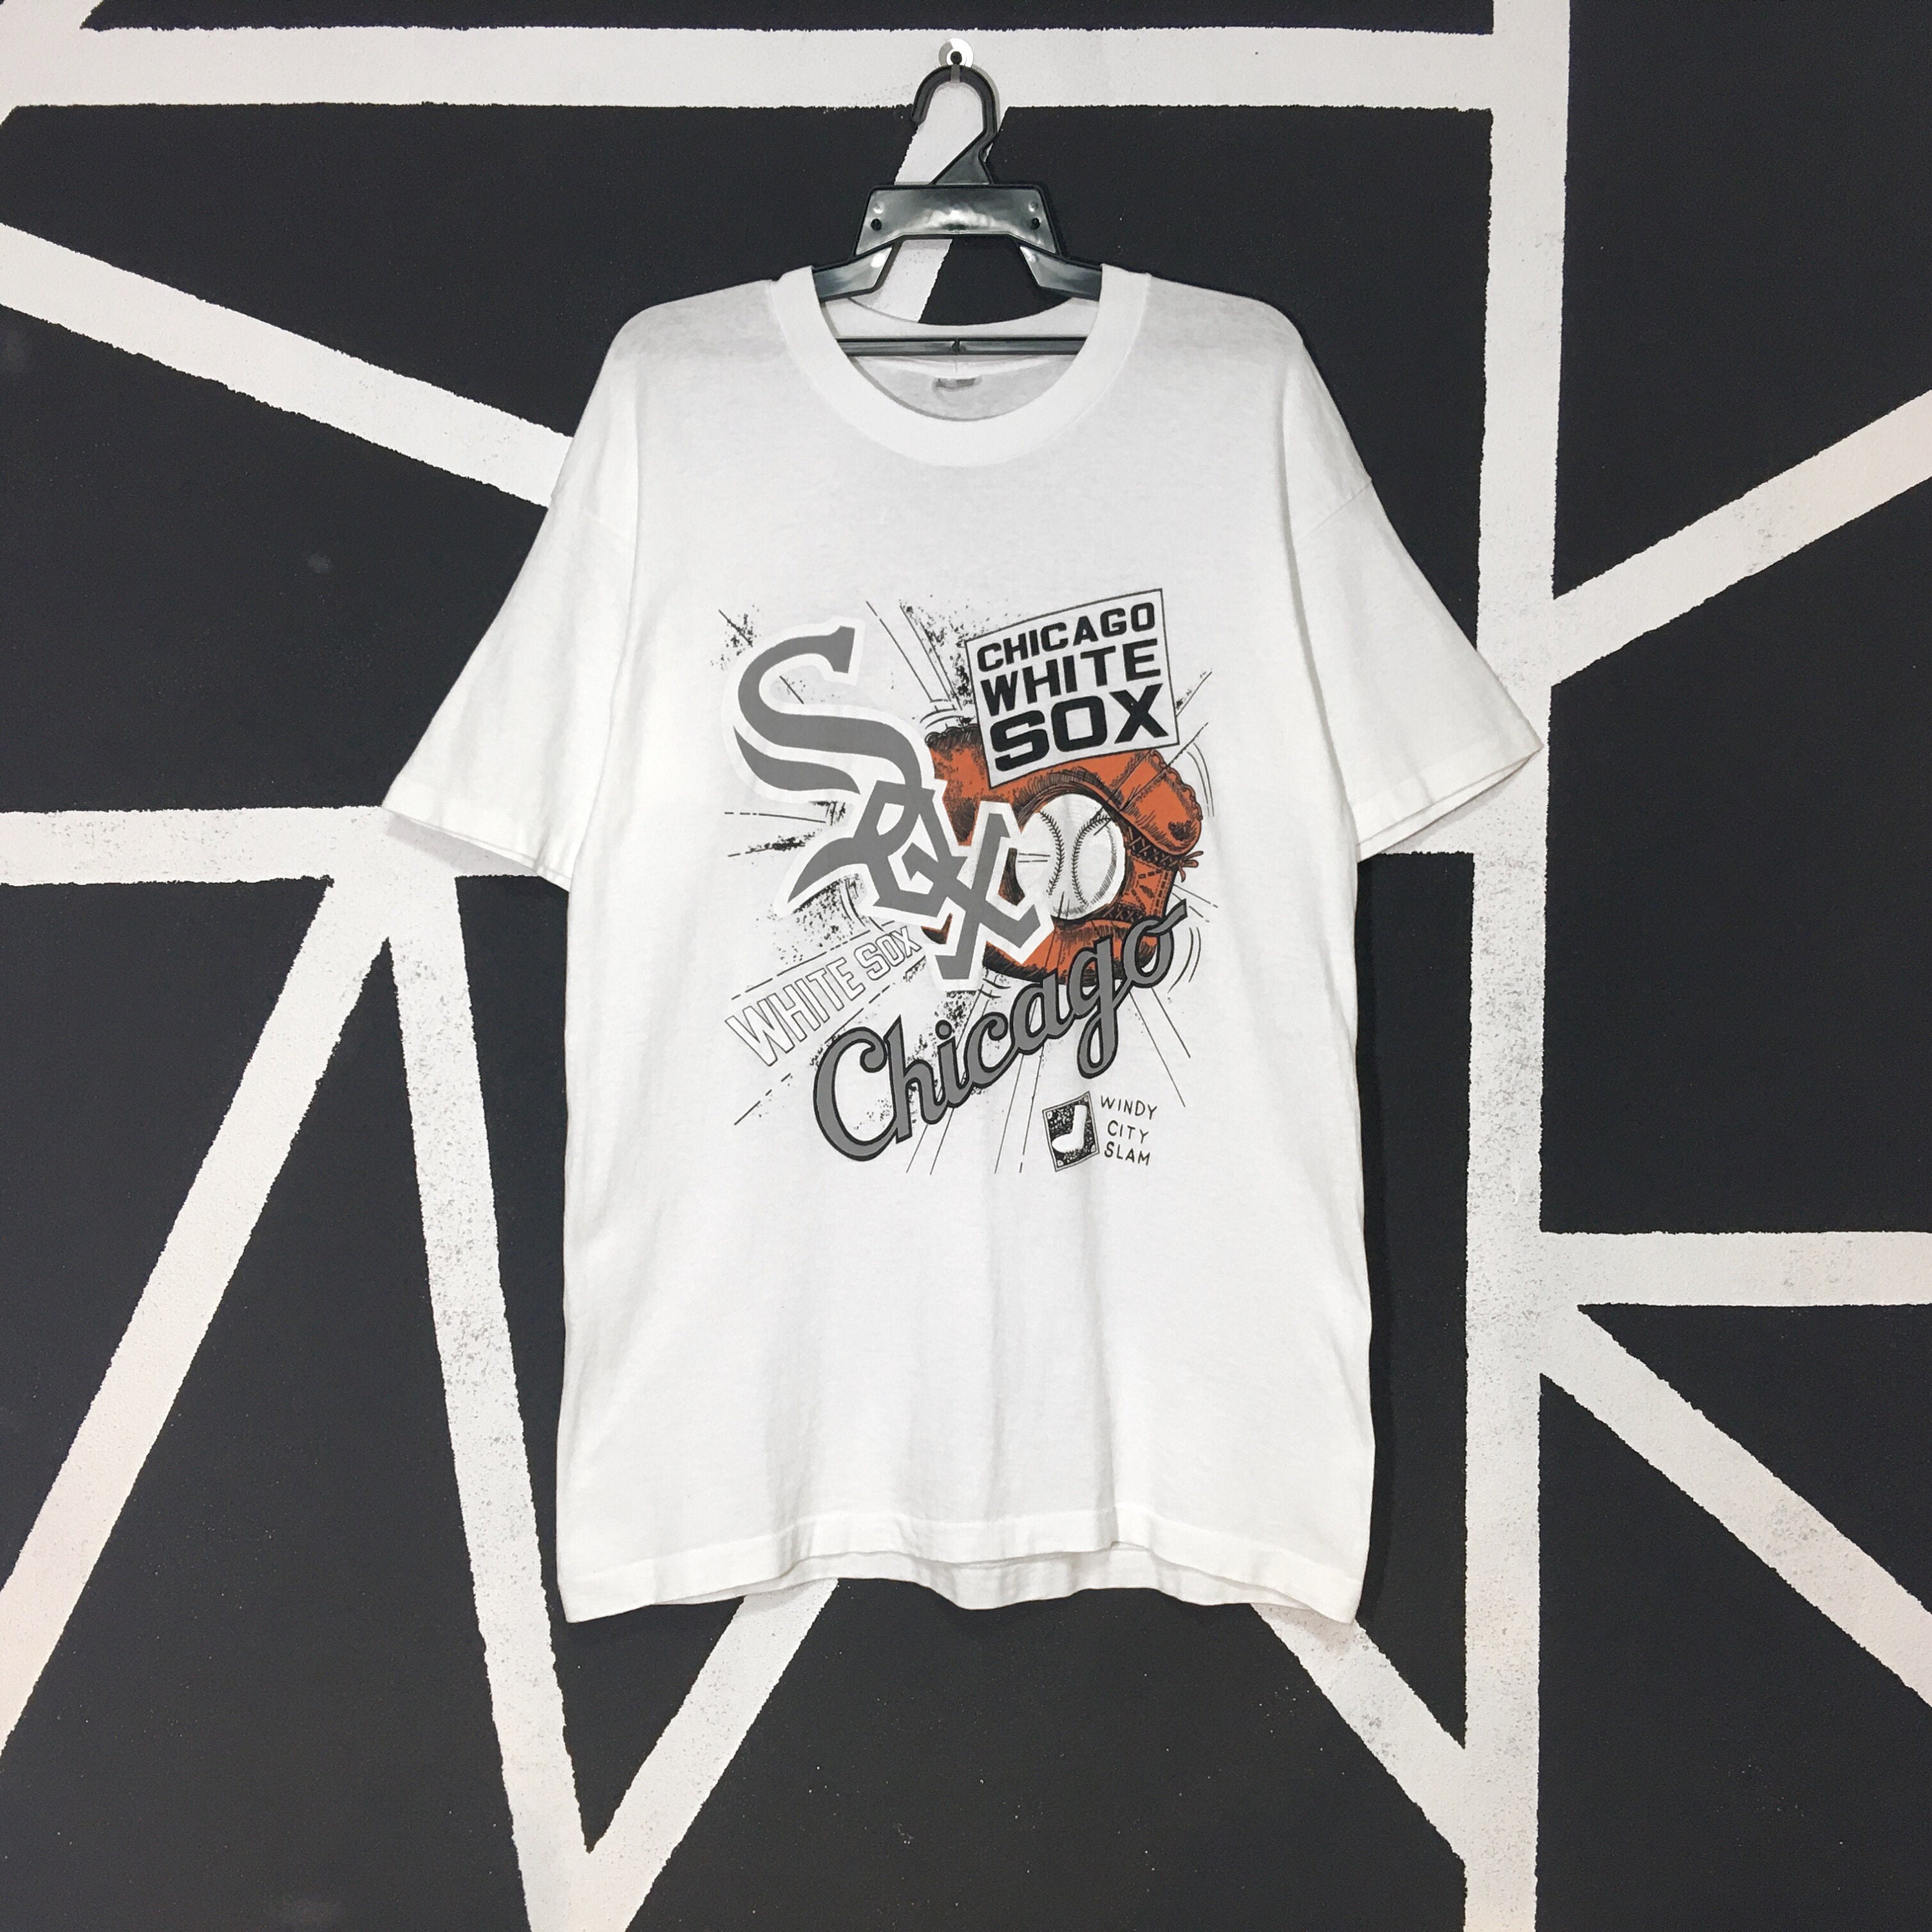 Chicago White Sox Southside Sox T-Shirt - All Design Colors + Sizes S-5XL